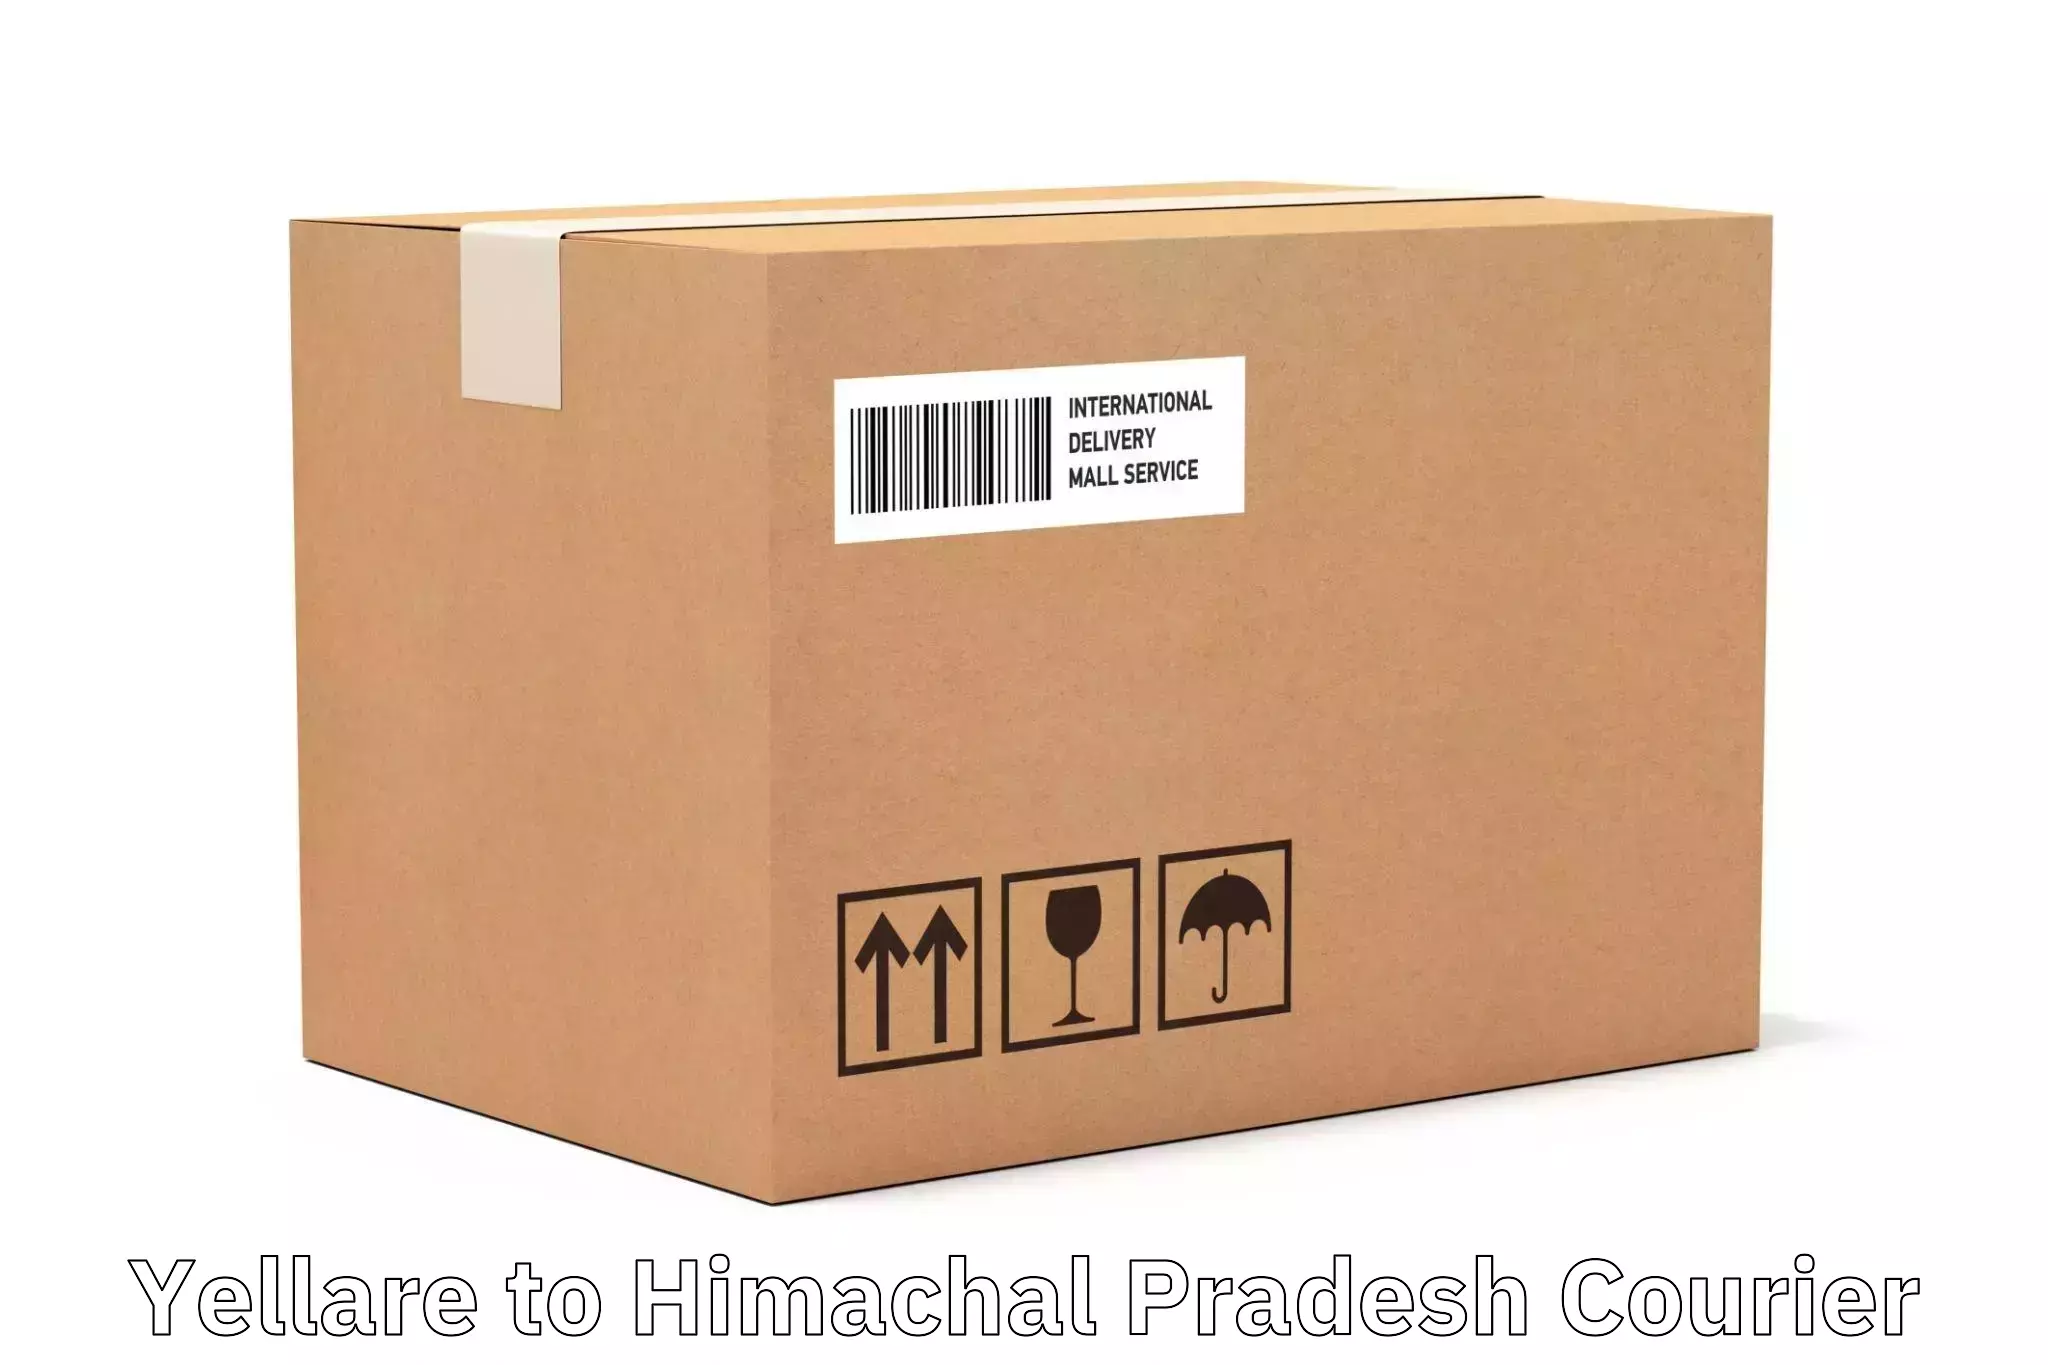 Cash on delivery service Yellare to Himachal Pradesh